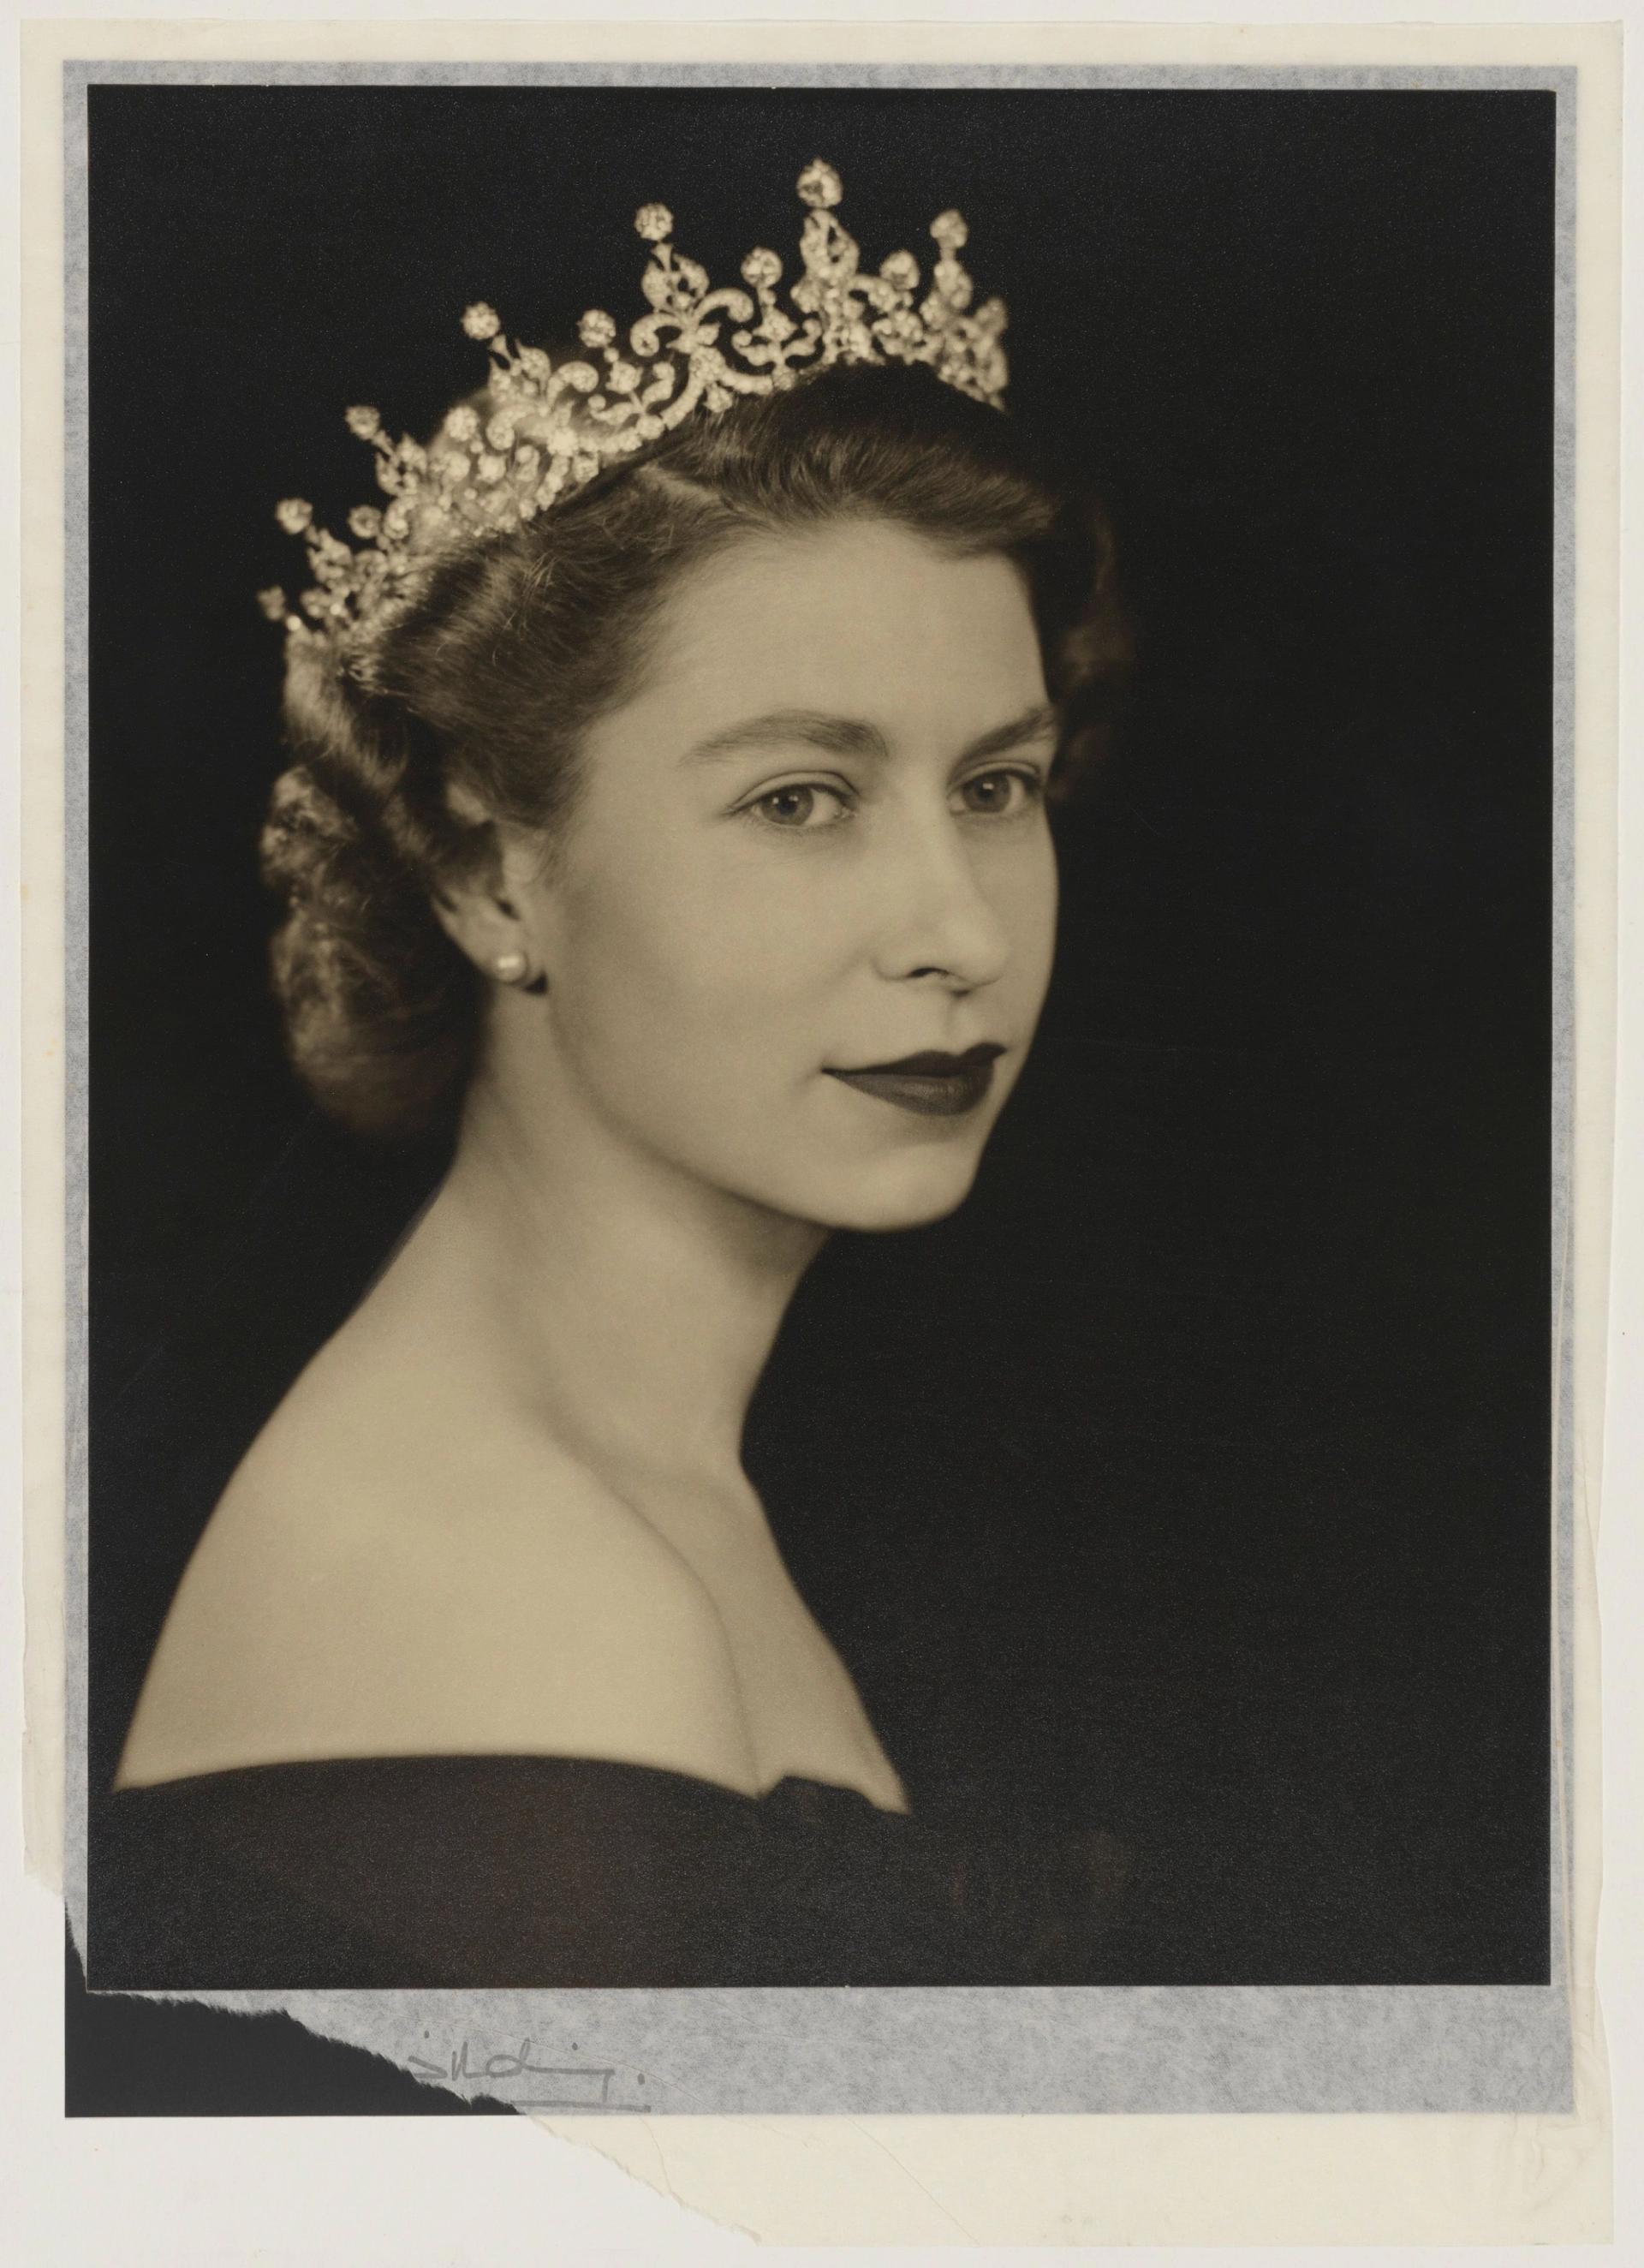 Queen Elizabeth II by Dorothy Wilding, 26 February 1952

© National Portrait Gallery, London